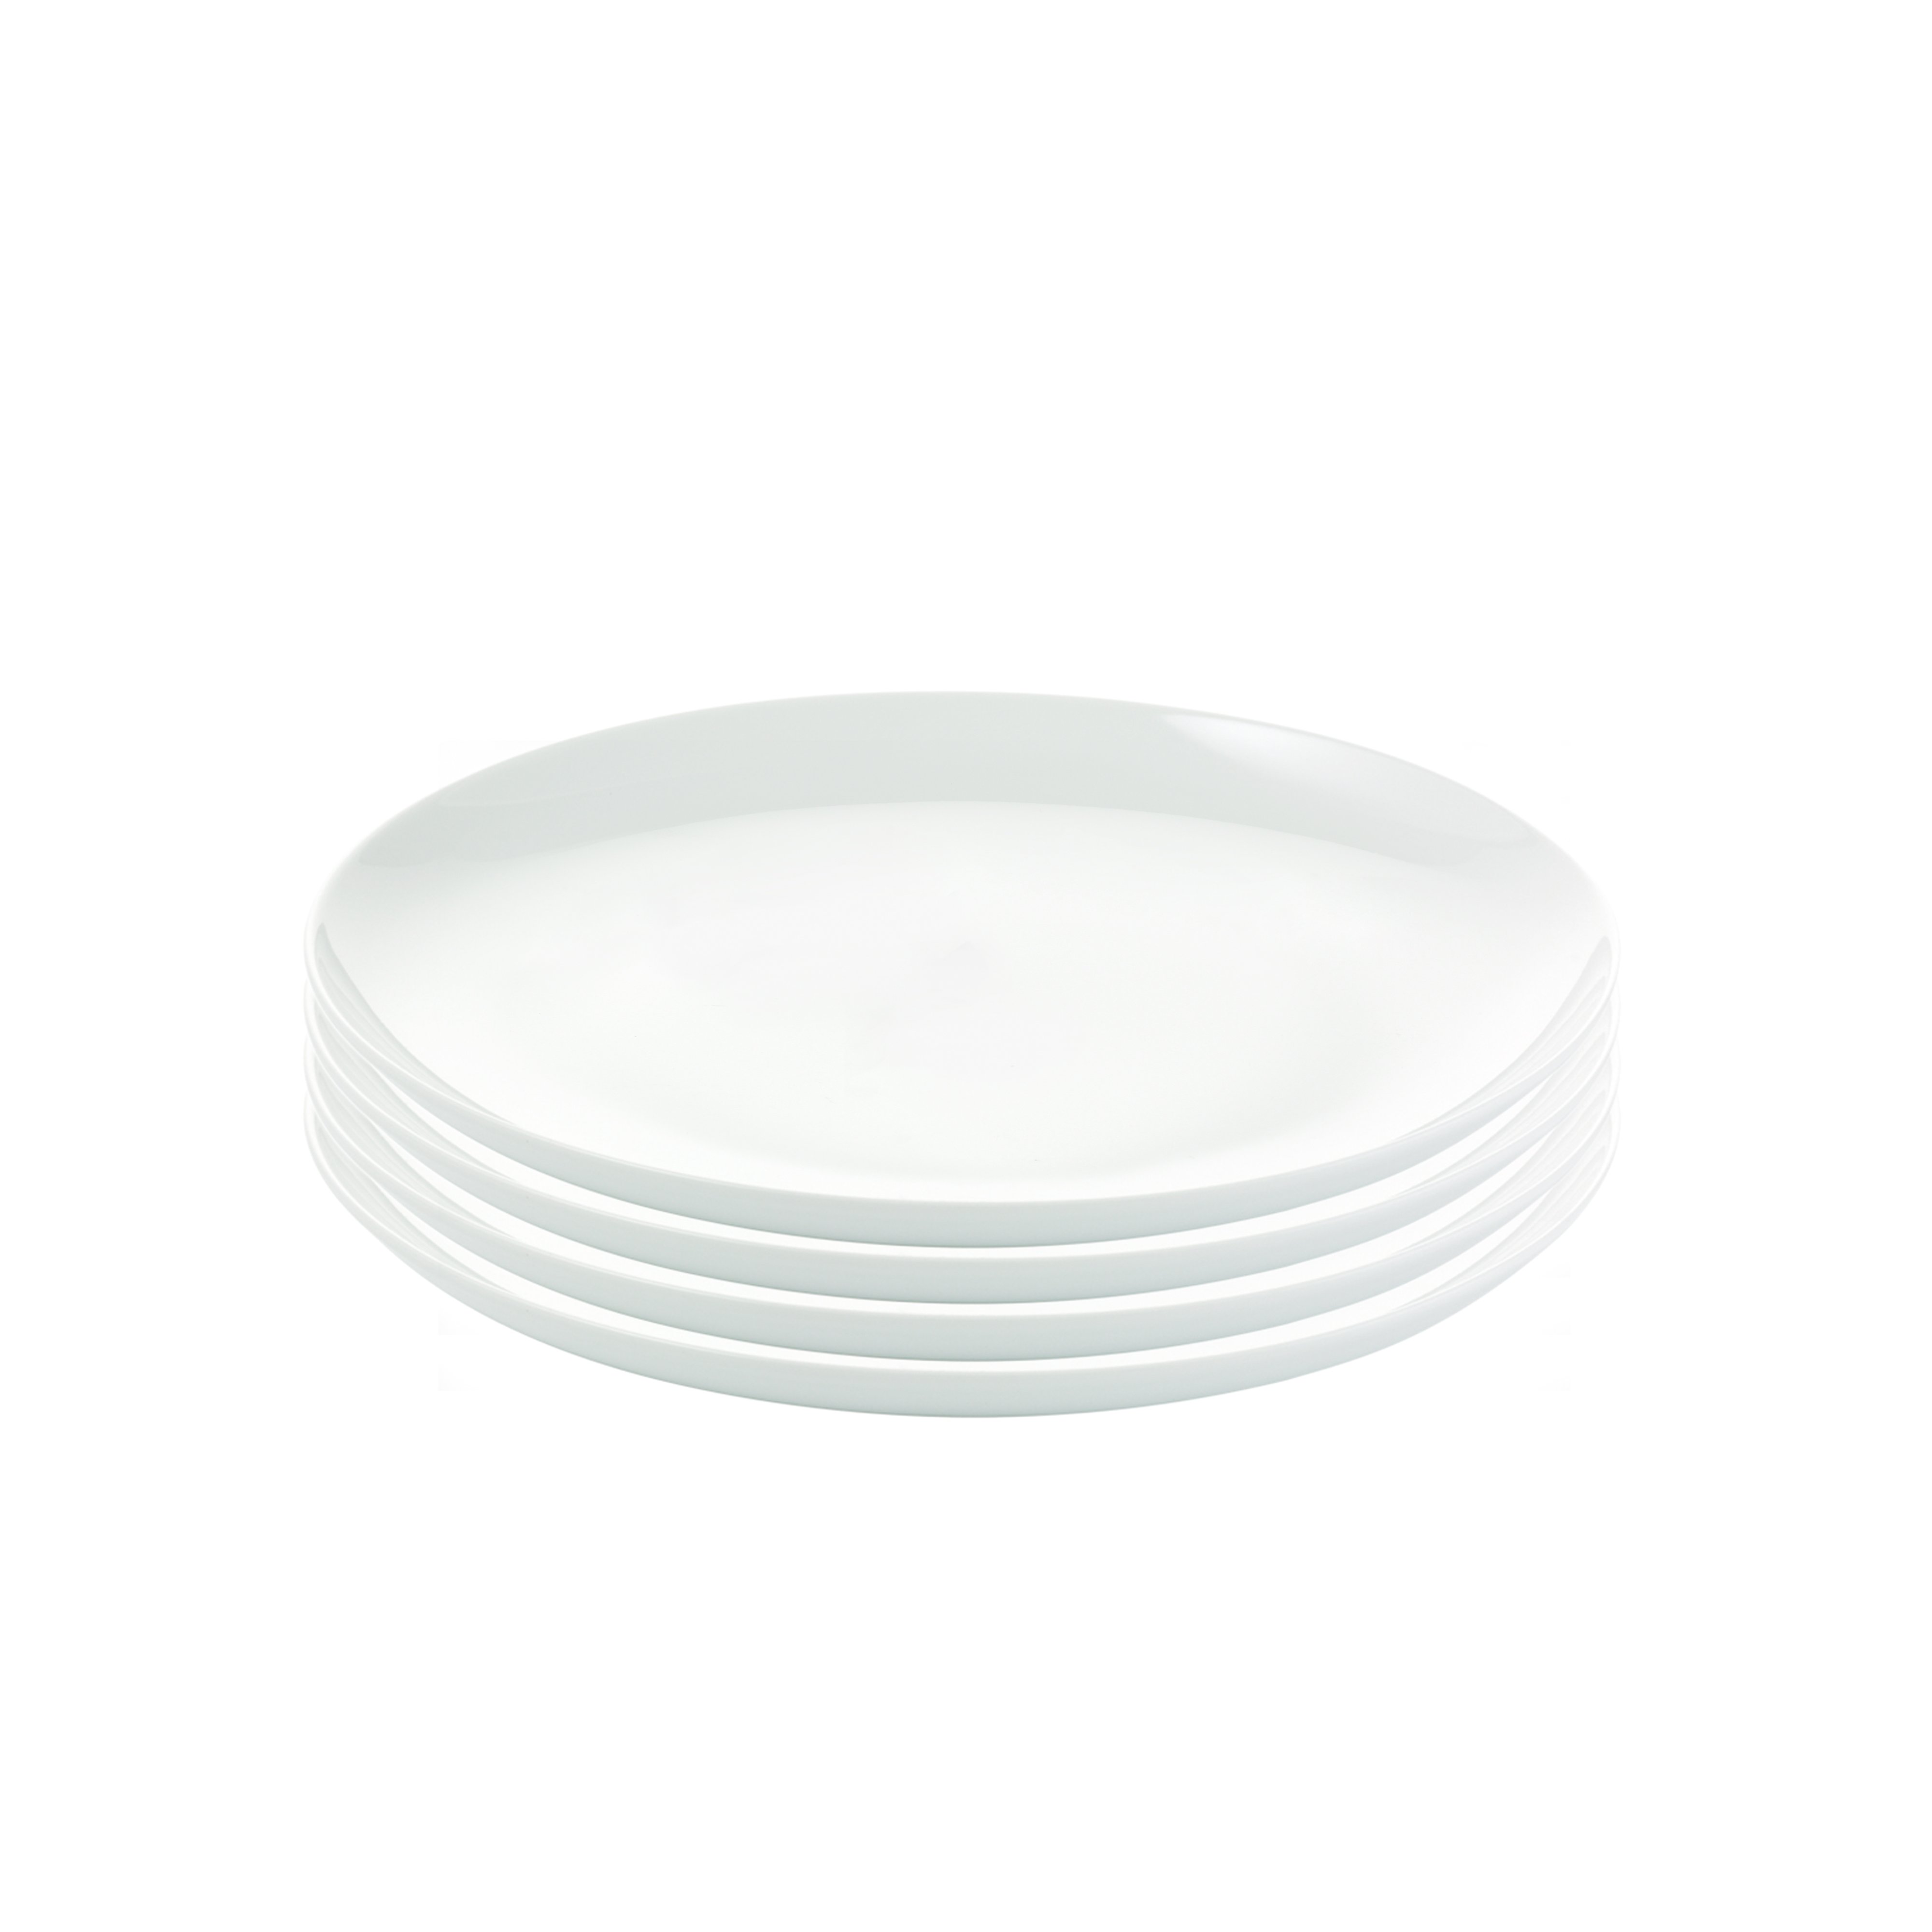 Aida - Atelier - super white dinner plates - 4 pcs (29083)